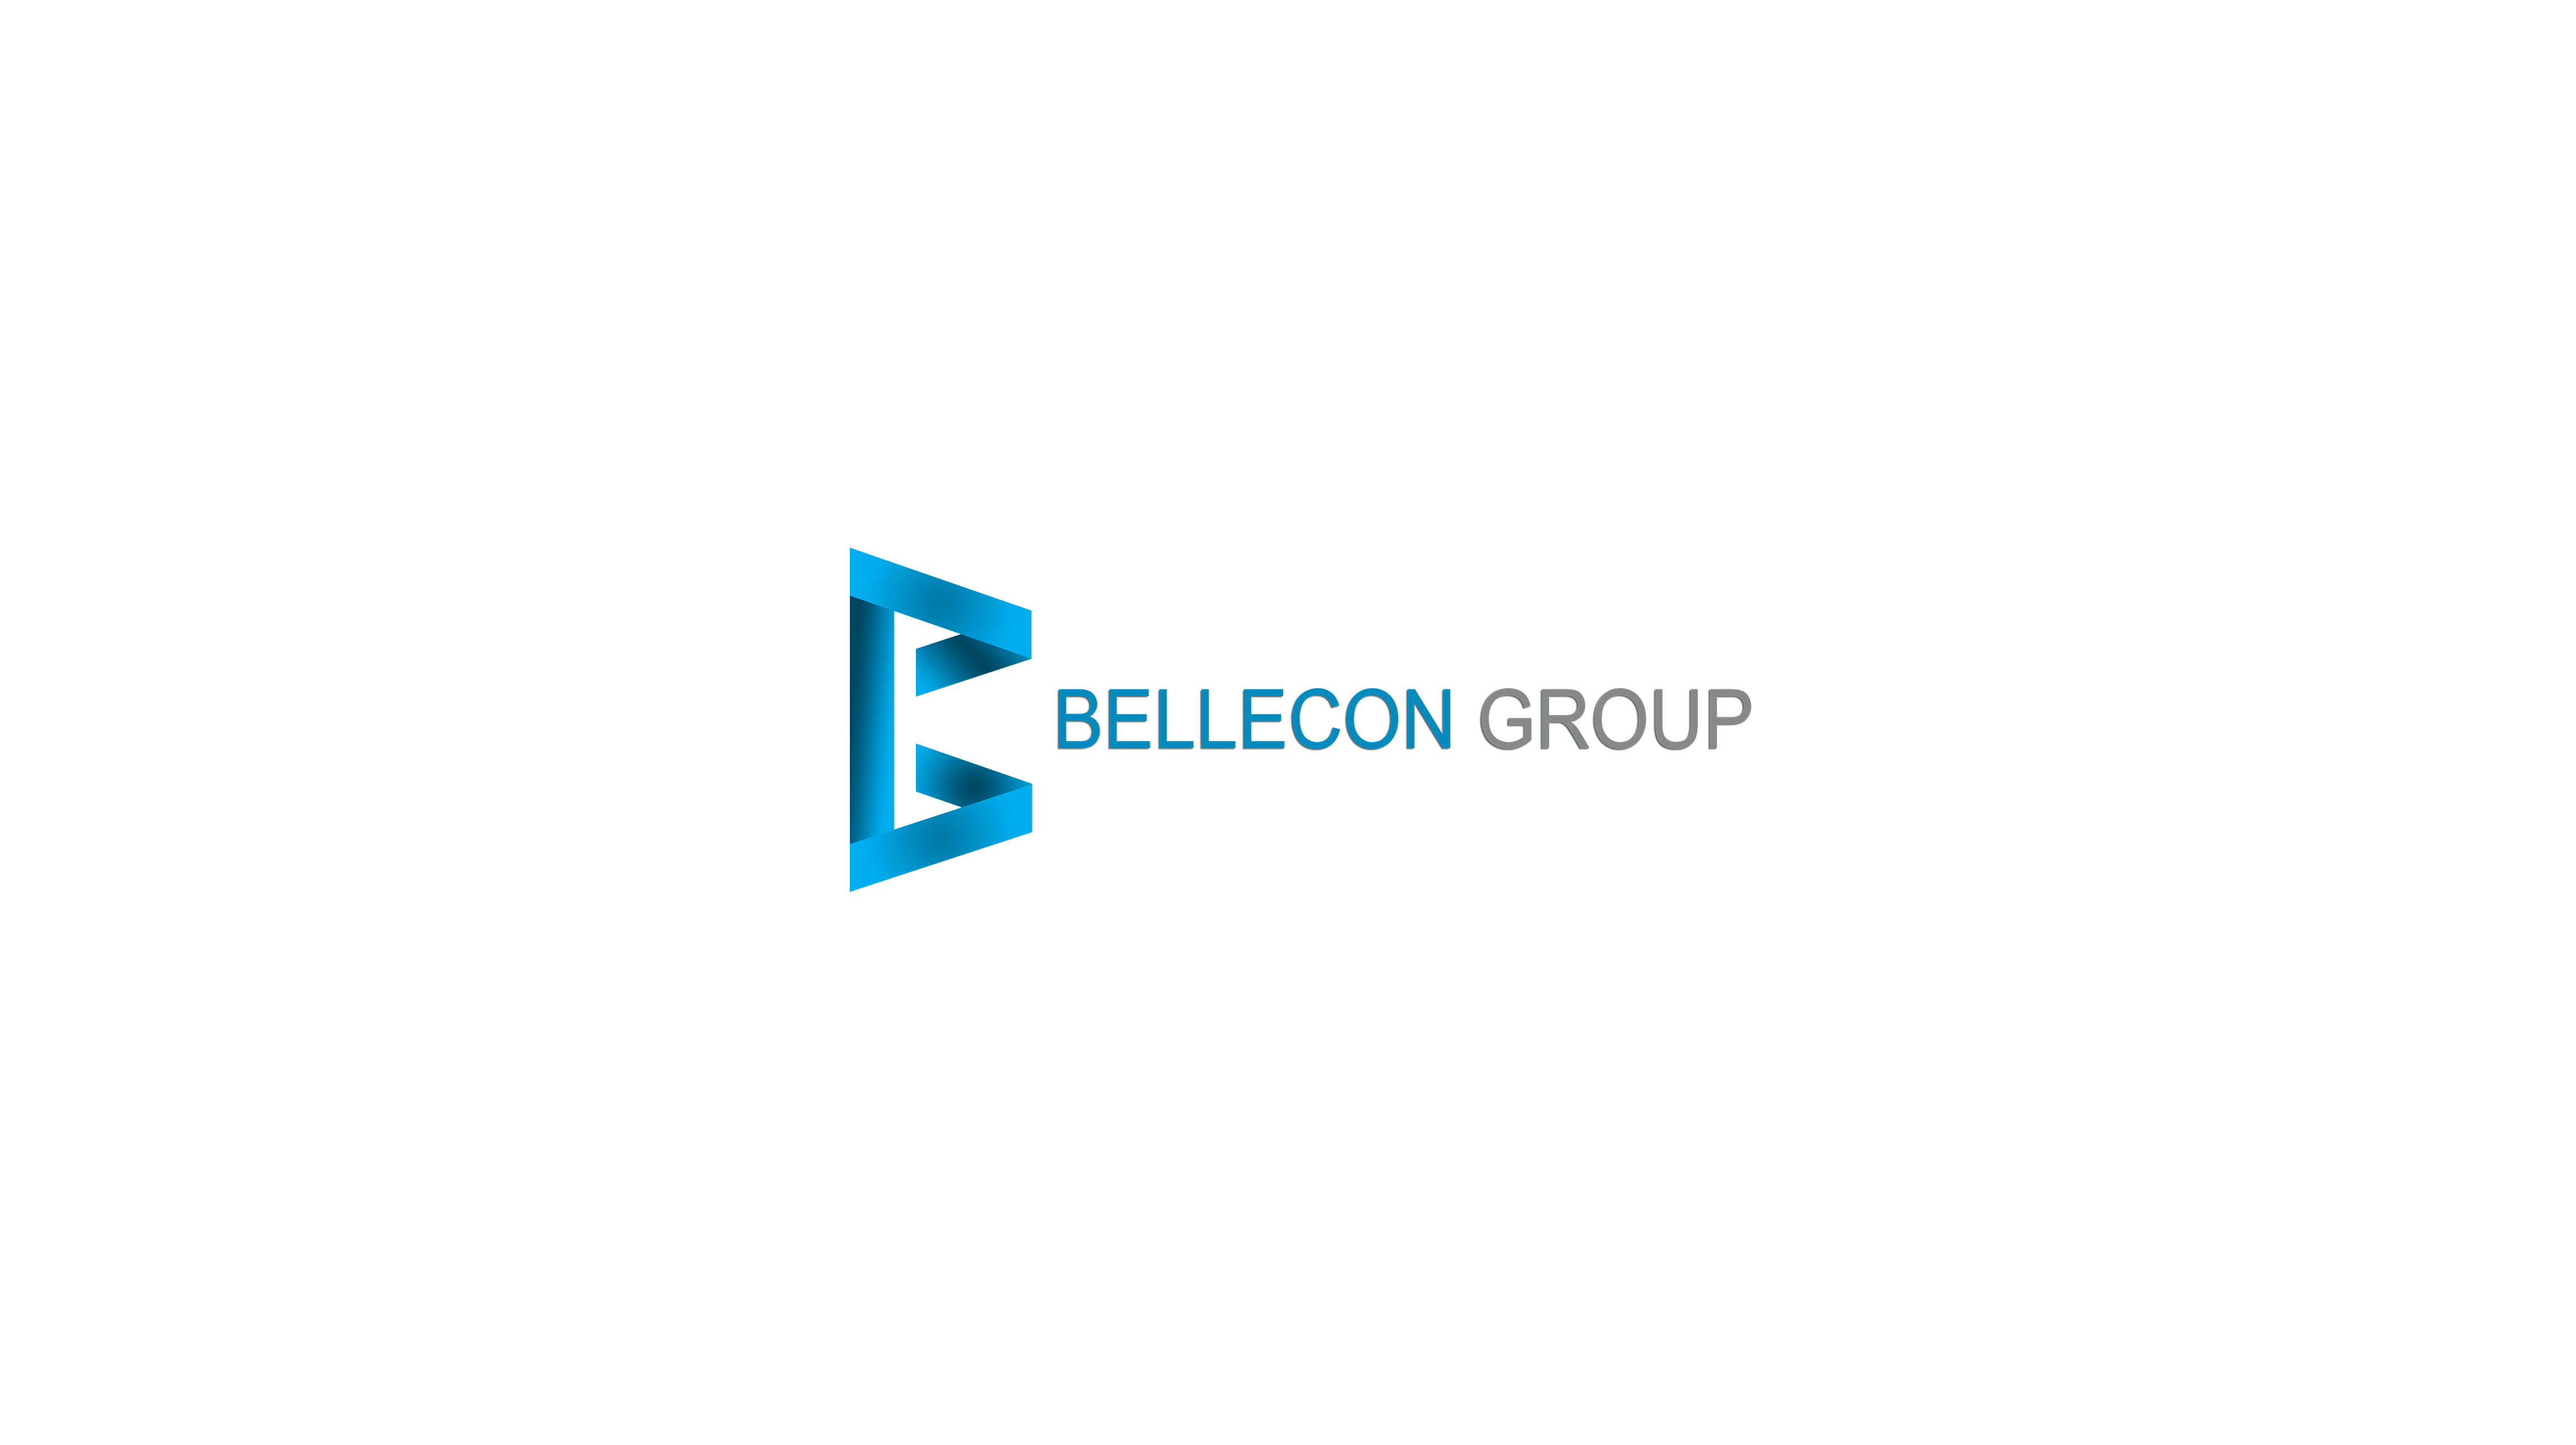 Bellecon Group (Unverified) logo